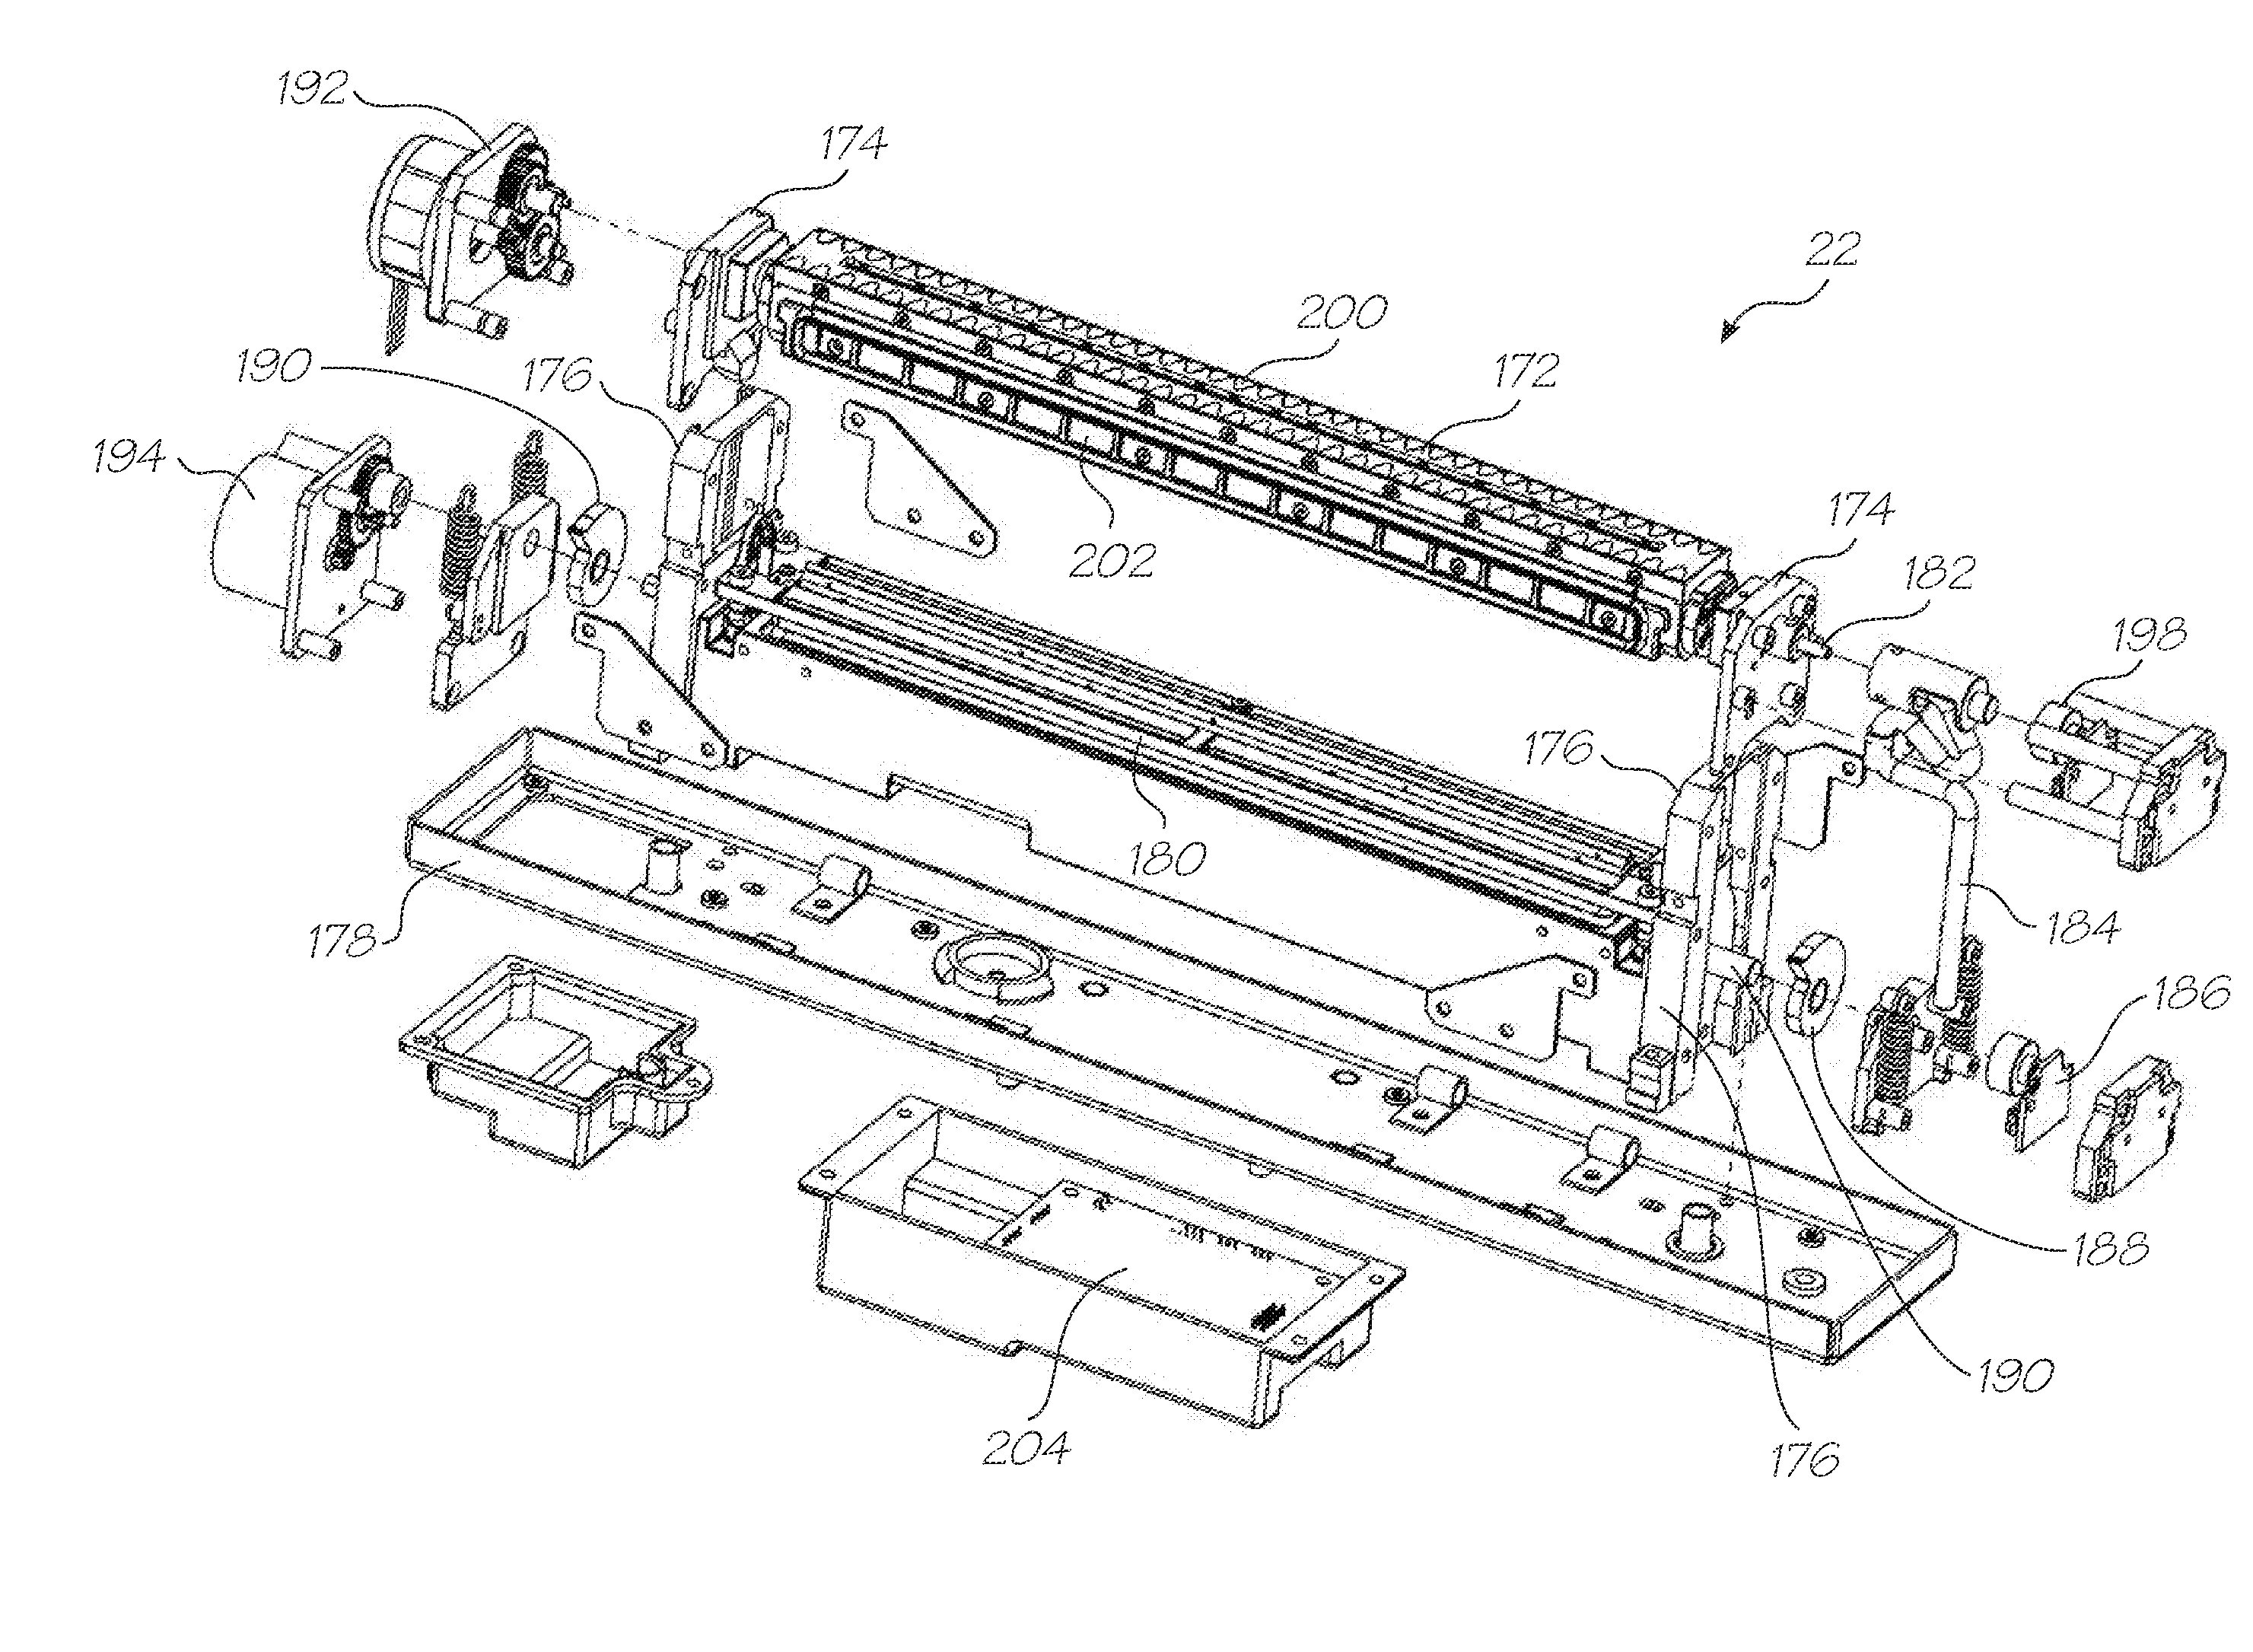 Wide format printer with multiple ink accumulators